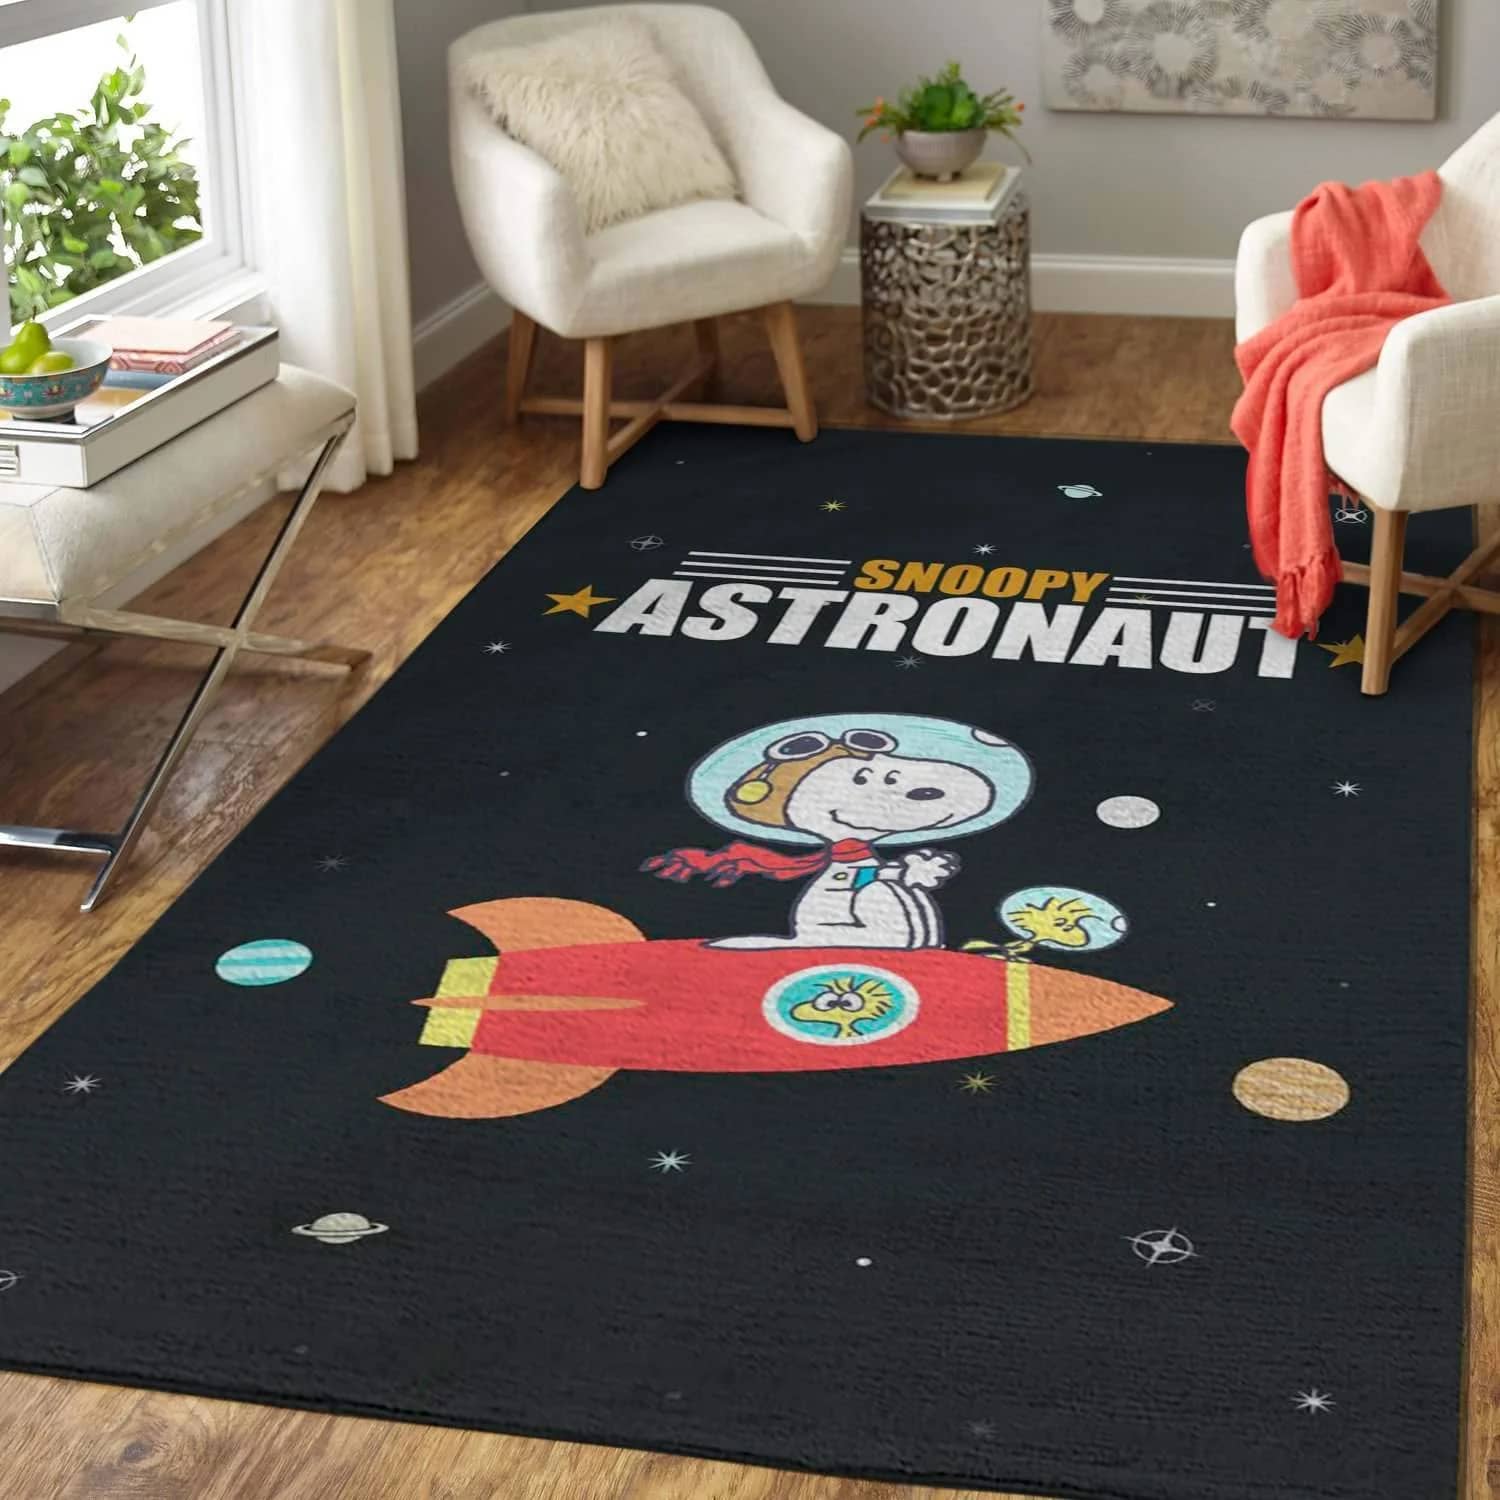 Disney Fans Snoopy Astronaut Area Limited Edition Amazon Best Seller Sku 264875 Rug